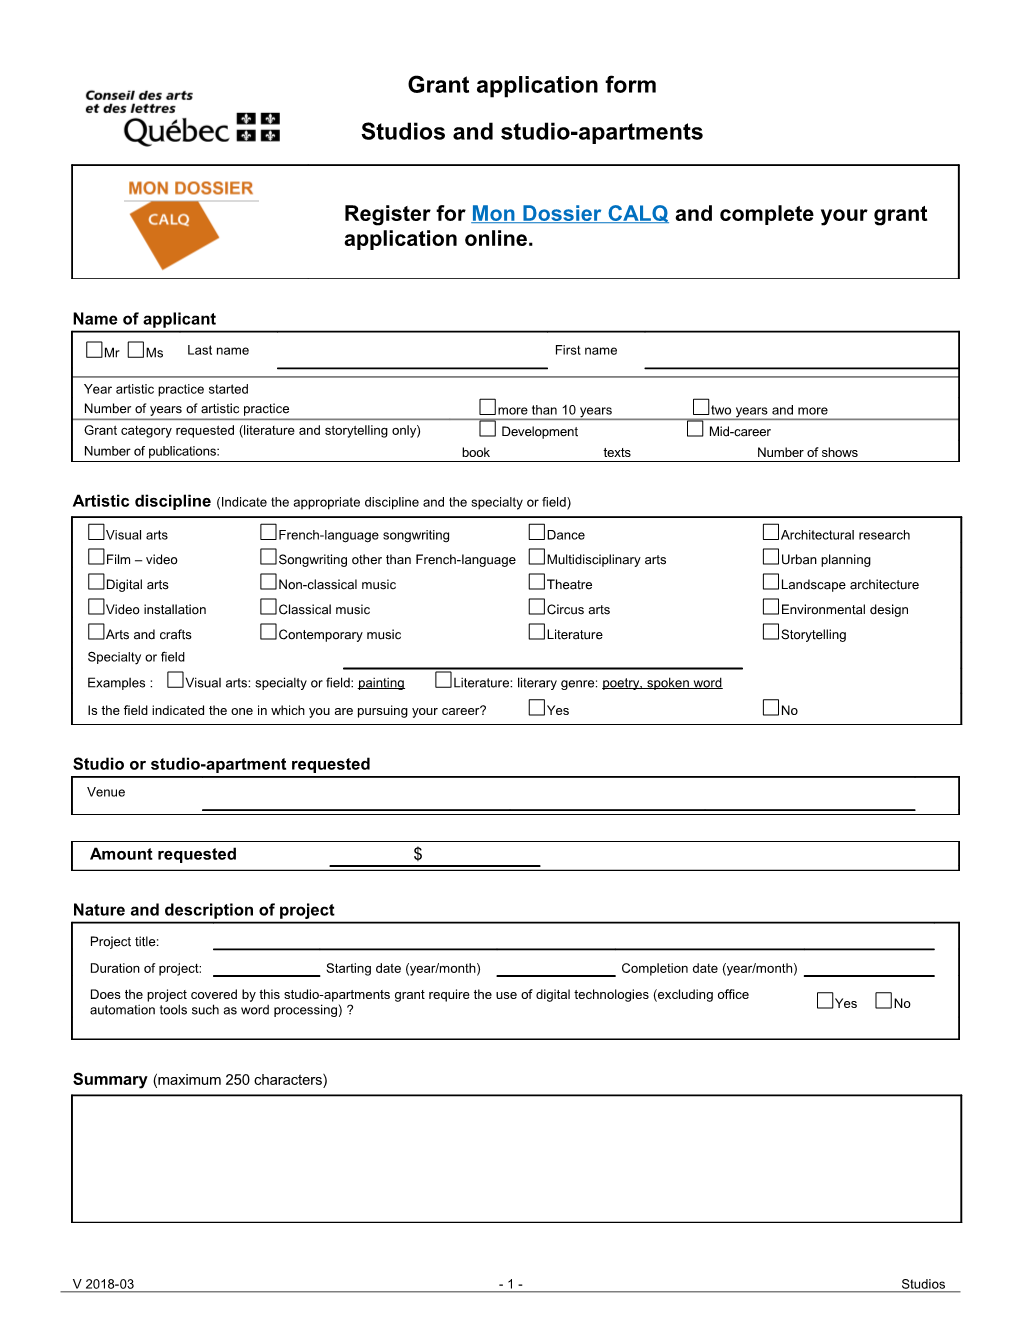 Grant Application Form - Travel